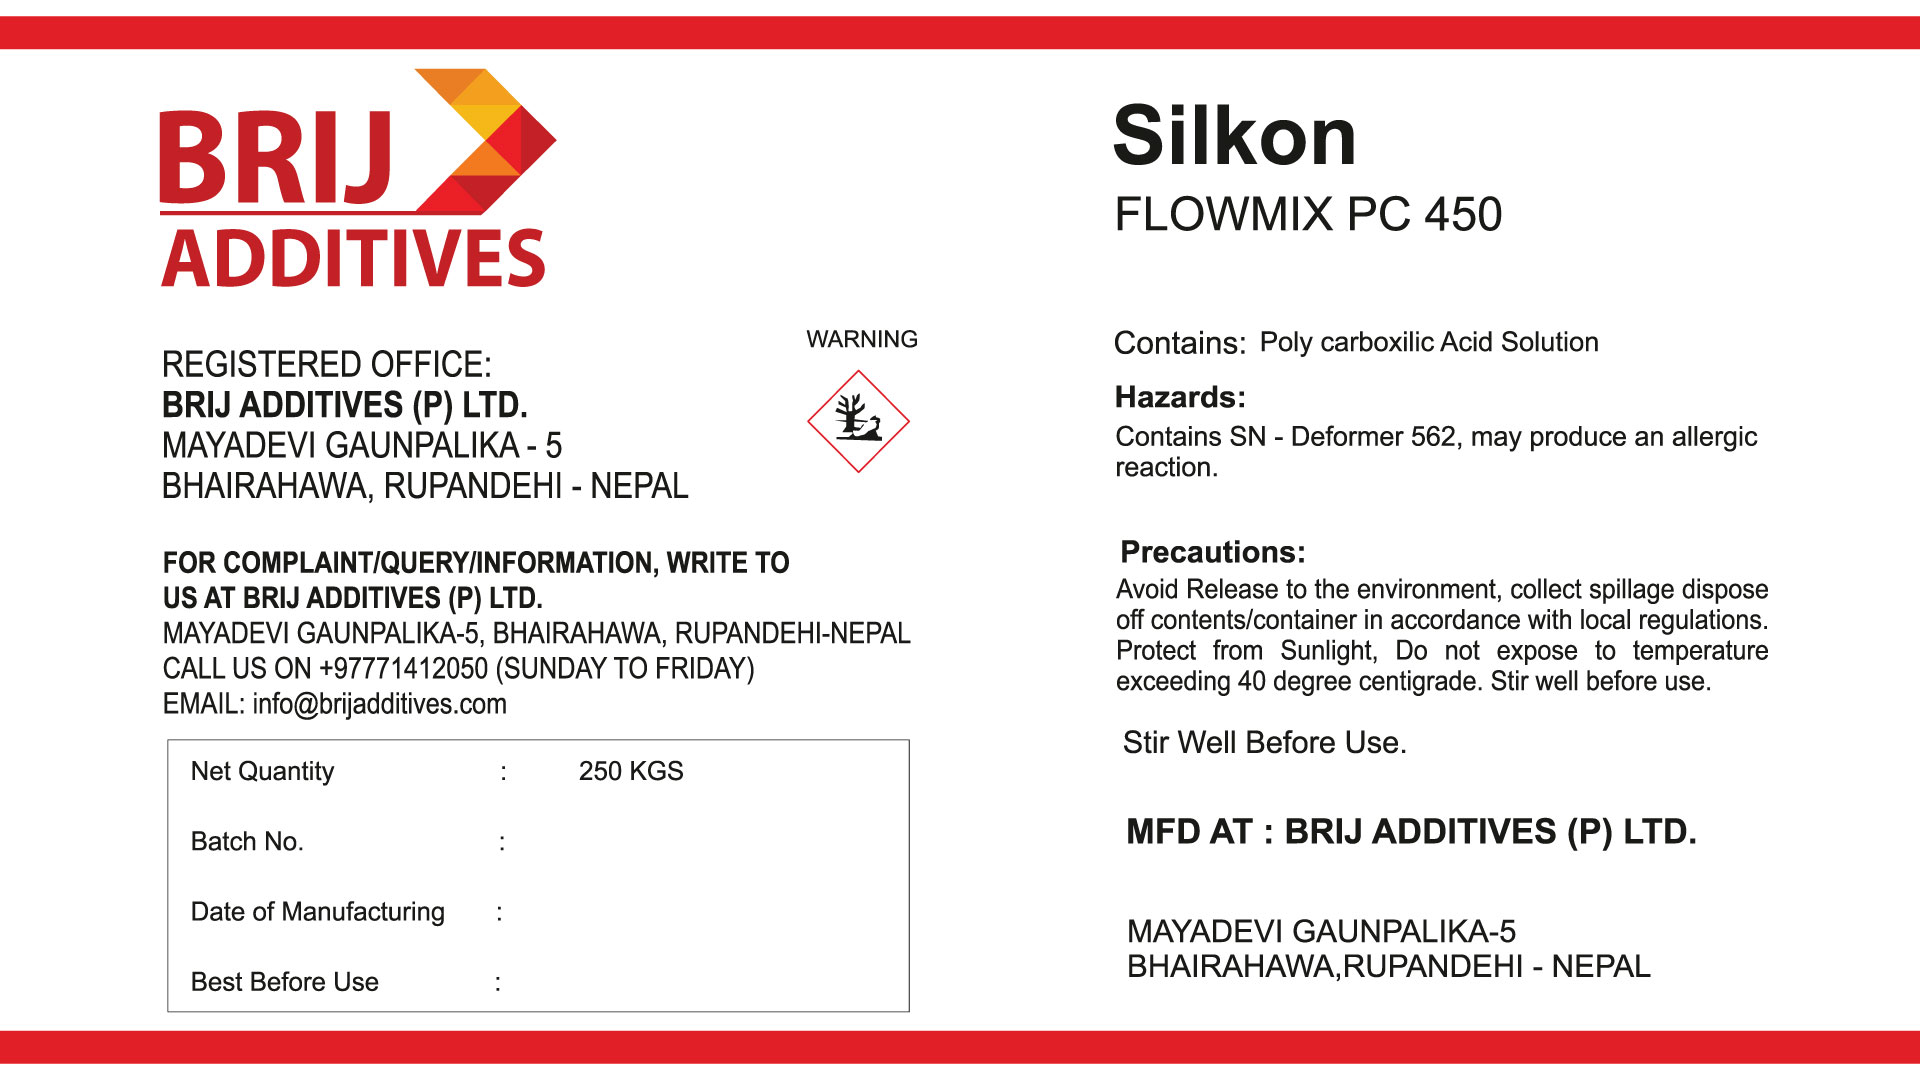 Silkon Flowmix PC 450